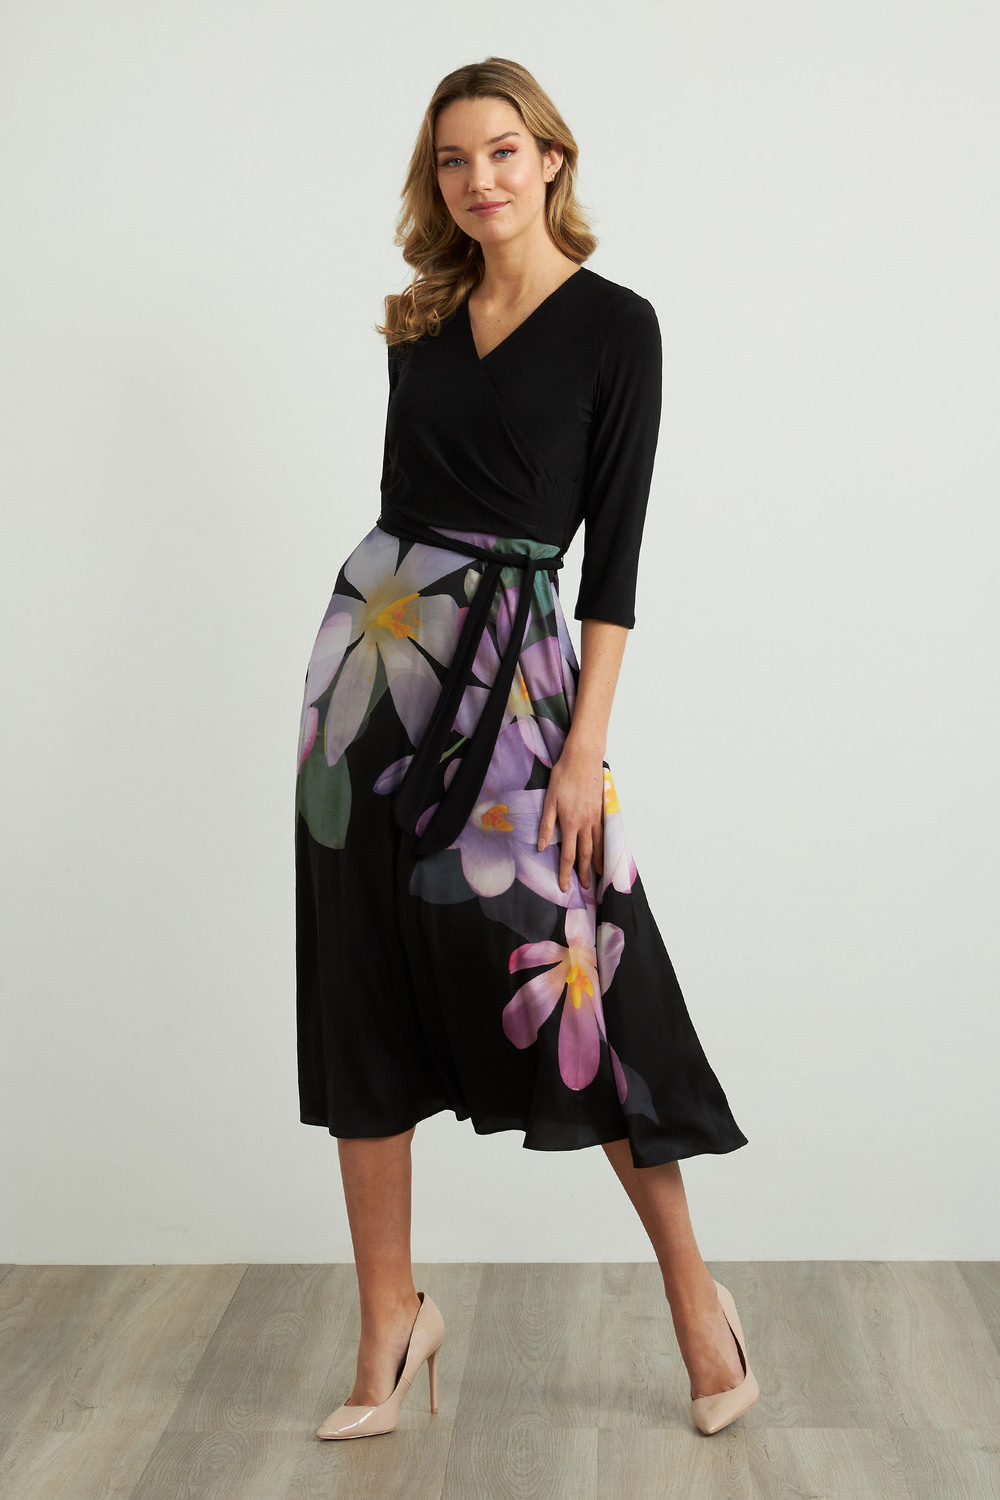 Joseph Ribkoff Long Sleeve Floral Dress Style 211177. Black/purple/multi